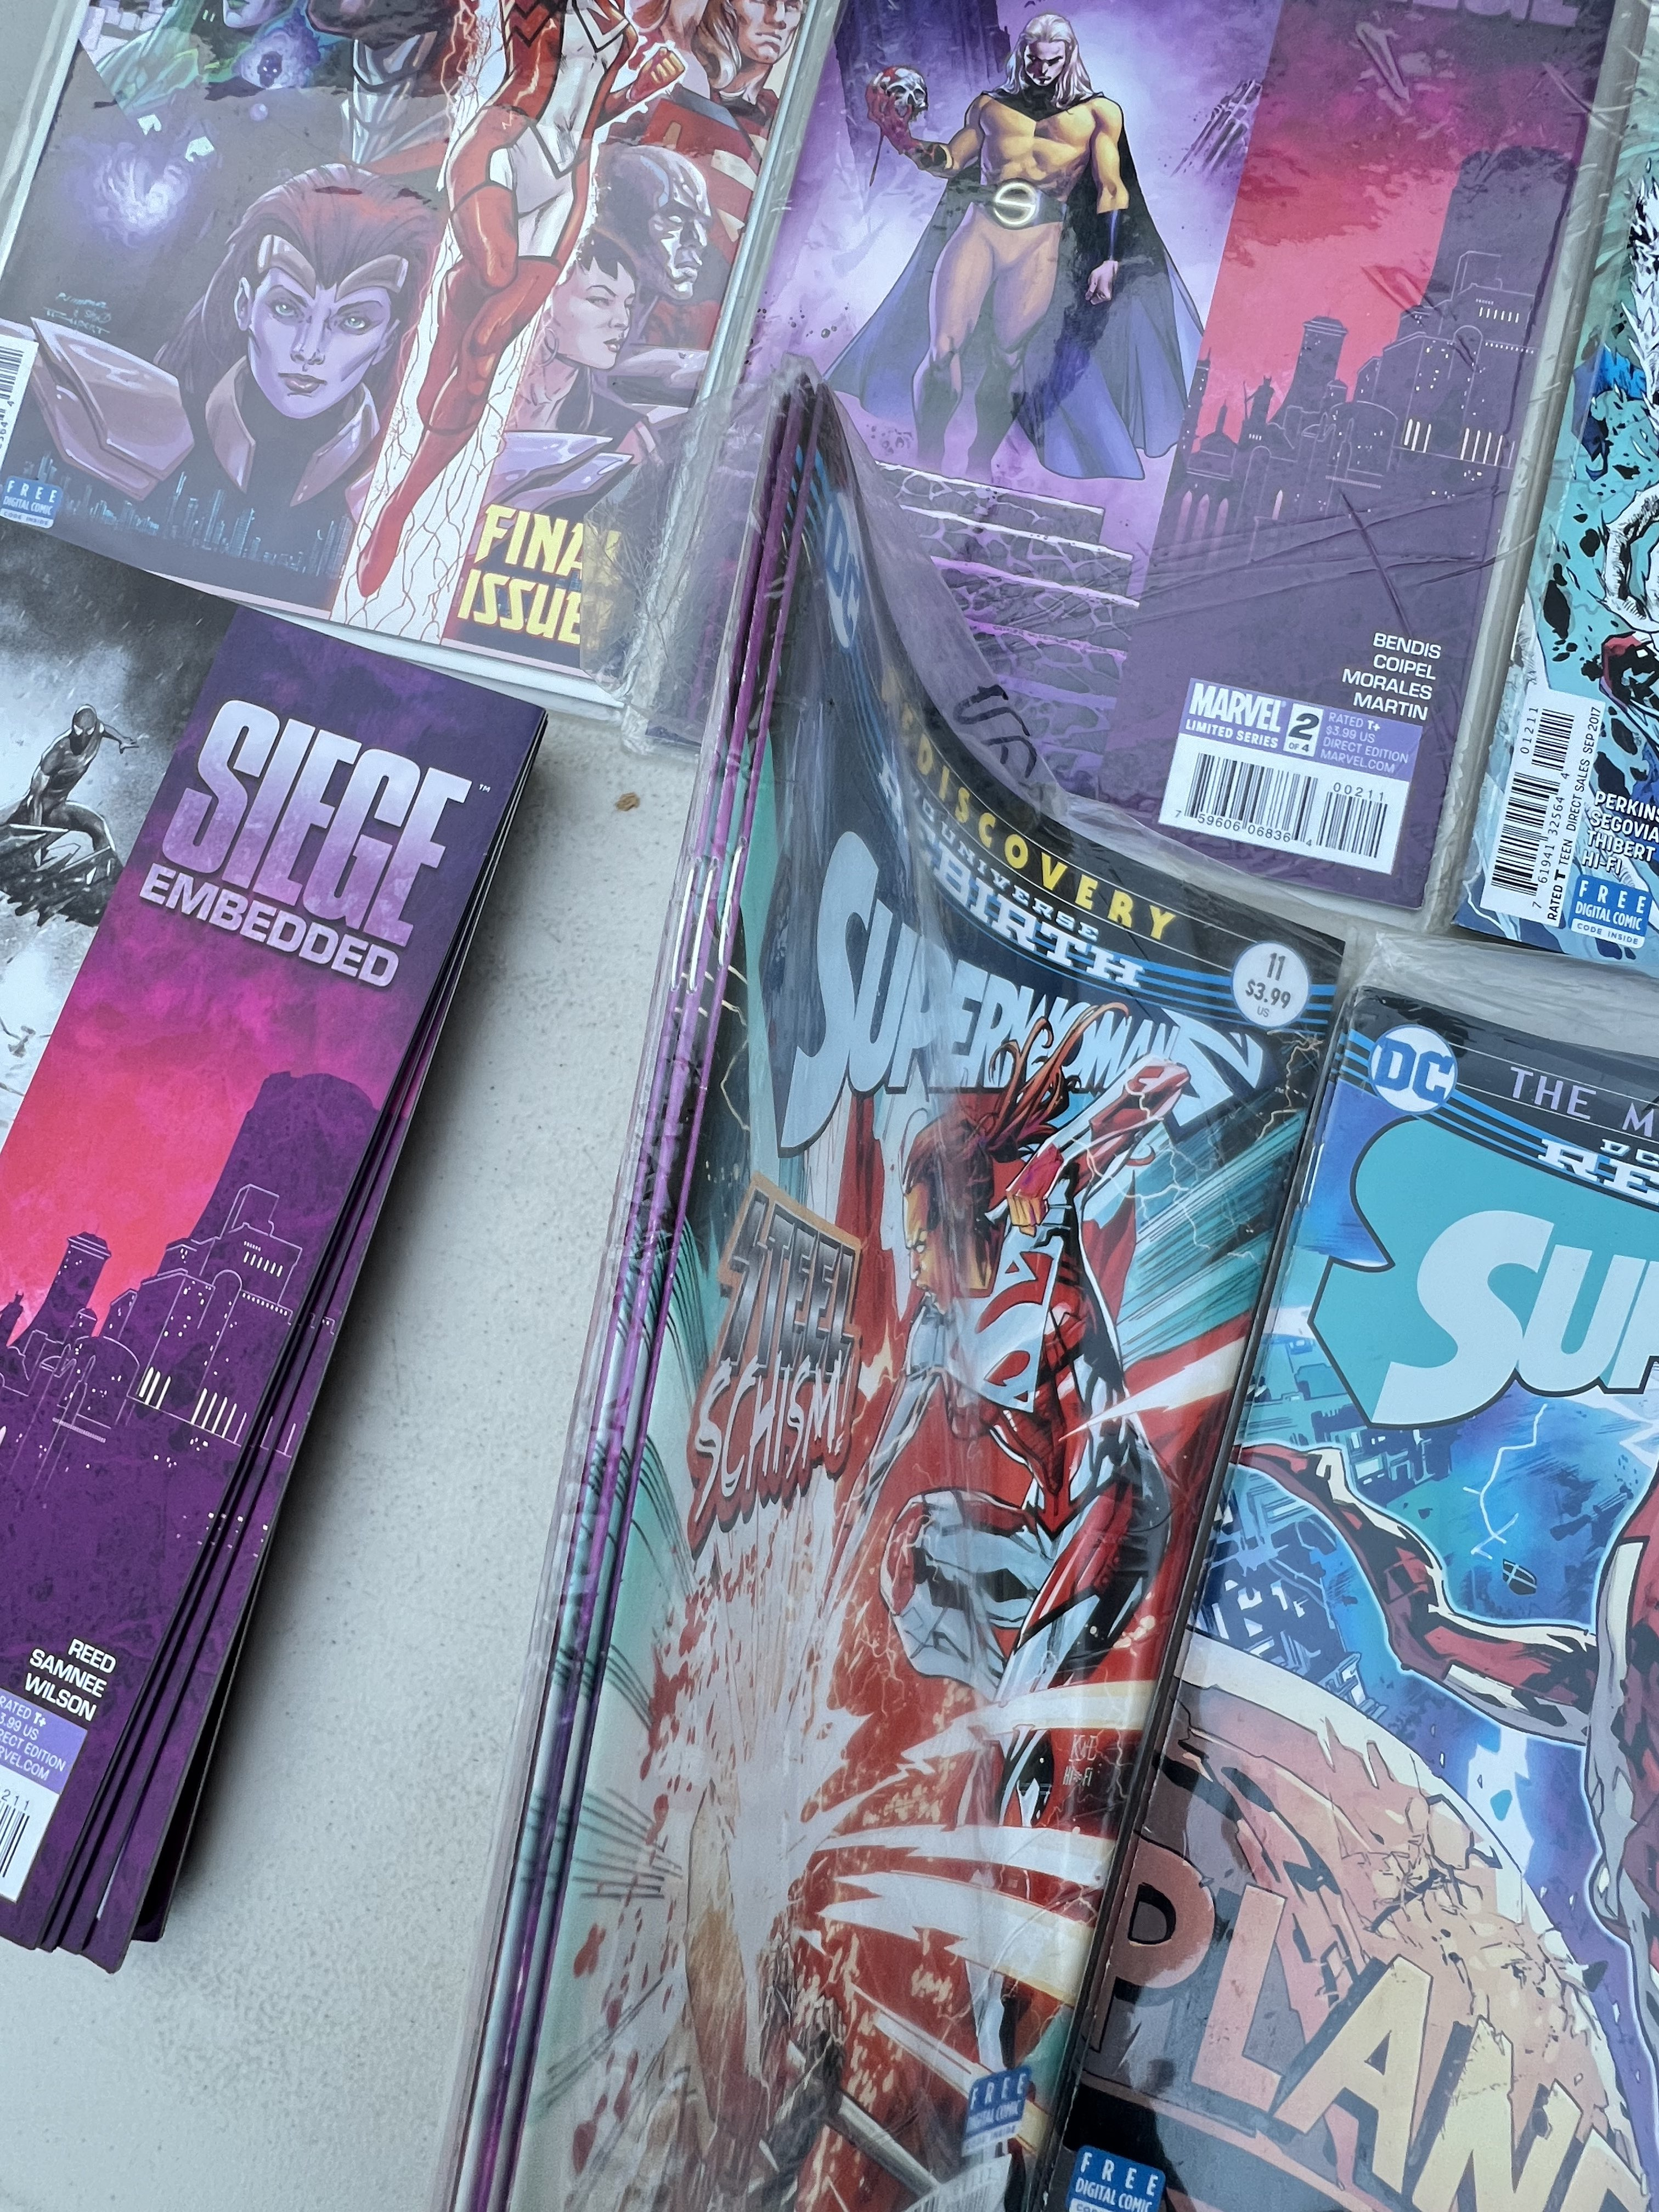 COMIC BOOK SUPERWOMANS SIEGE COLLECTION LOT 28 BOOKS DC COMICS ALL NEW